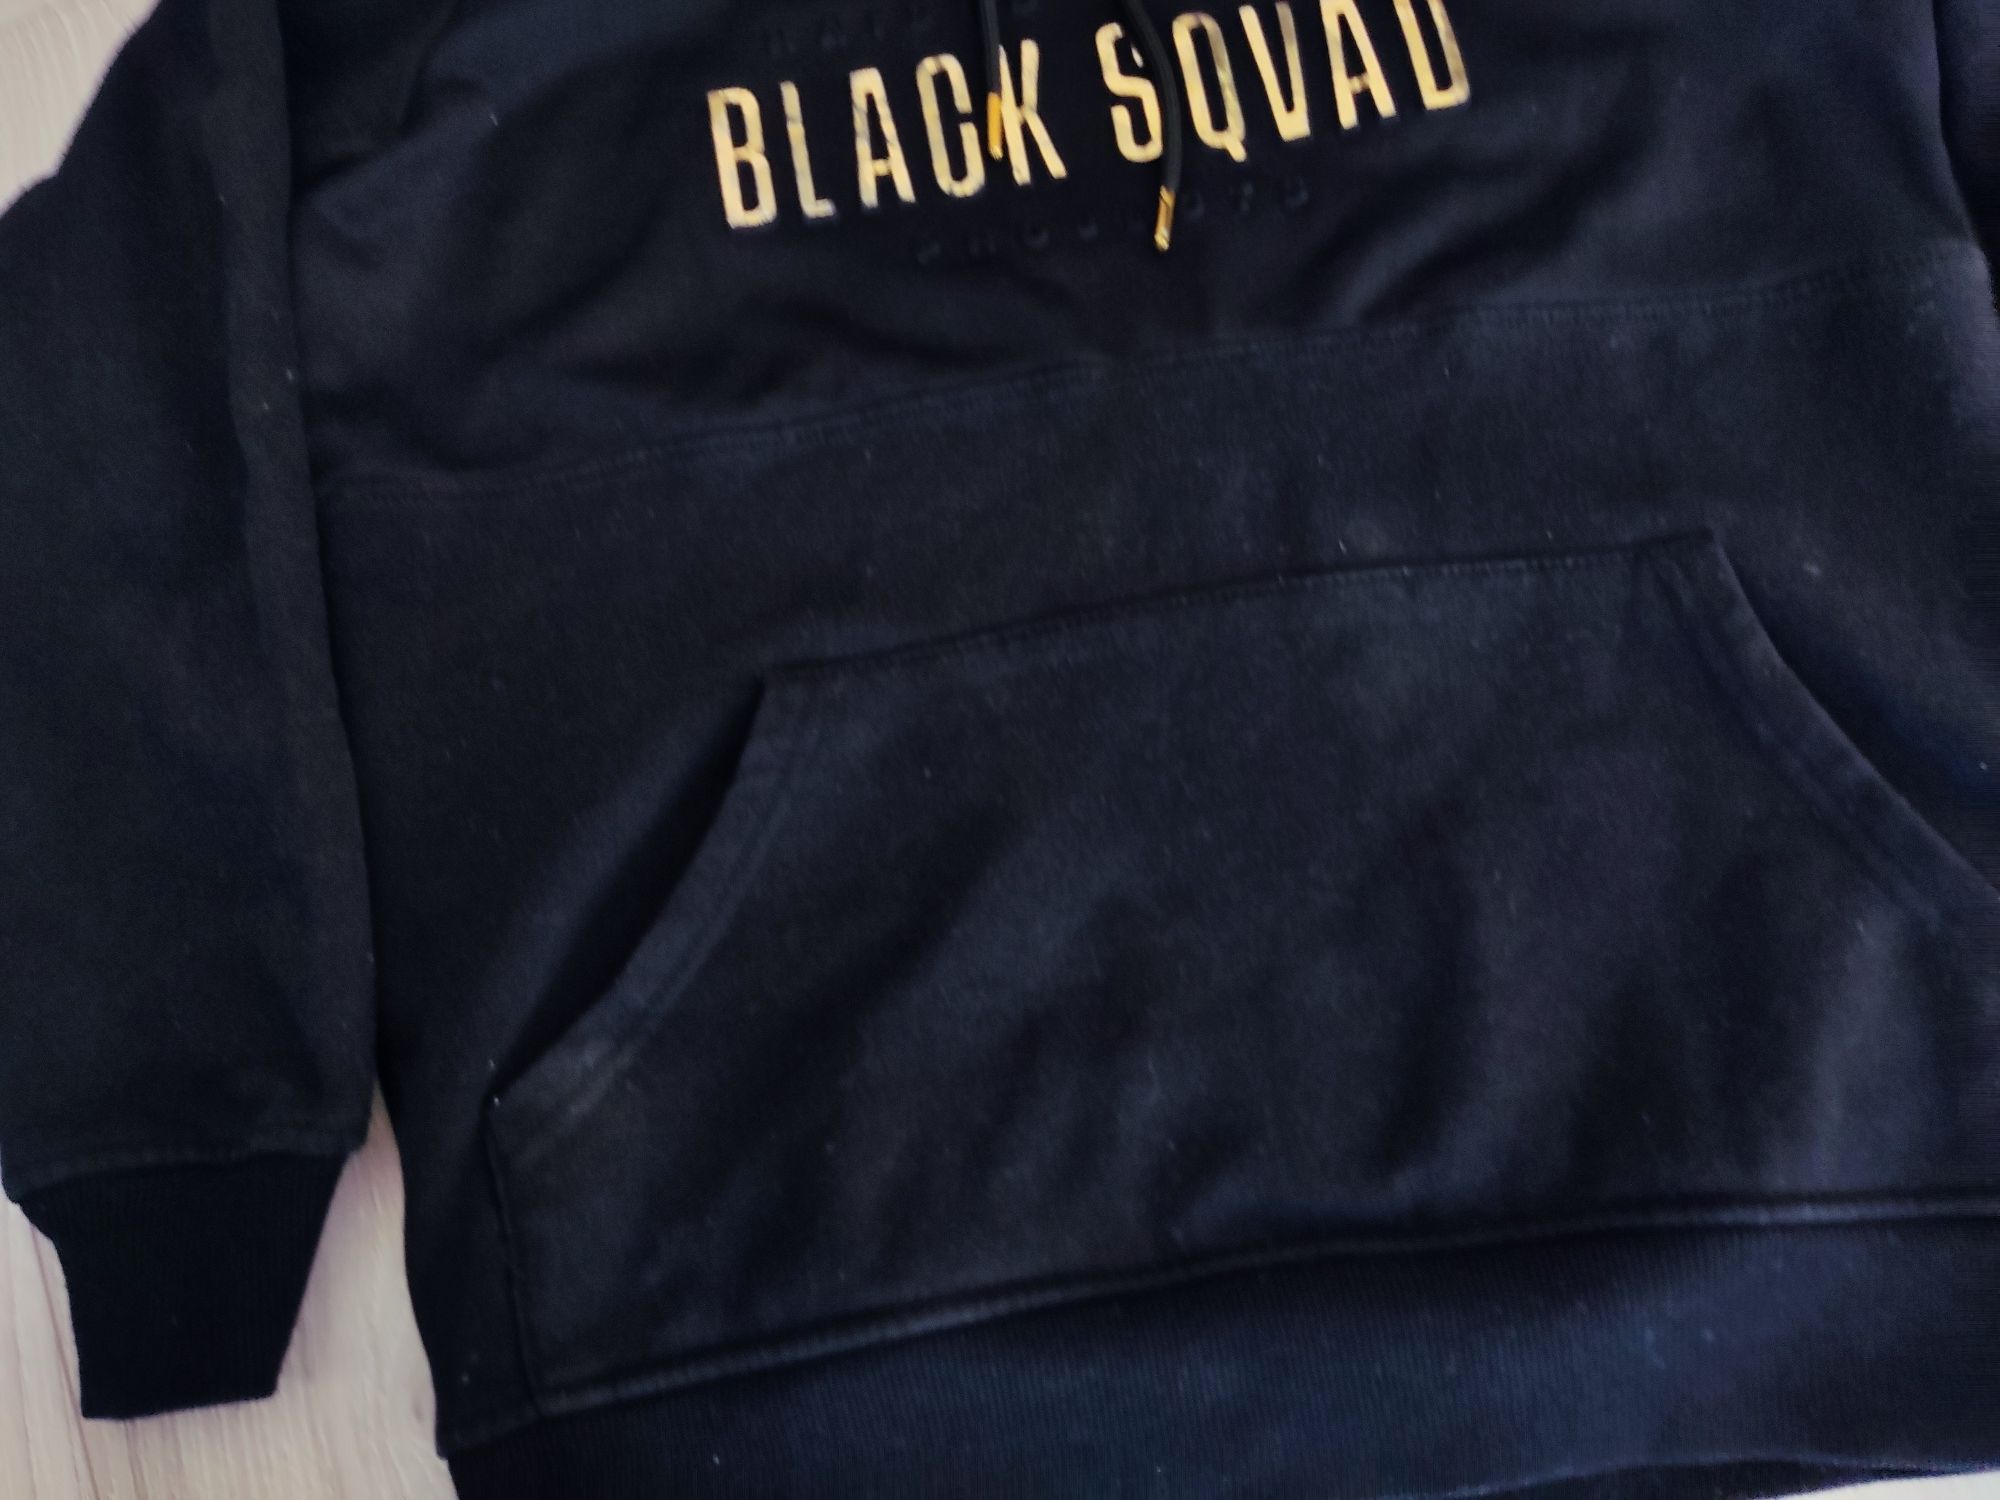 Bluza z kapturem Black Squad rozmiar S męska damska unisex czarna